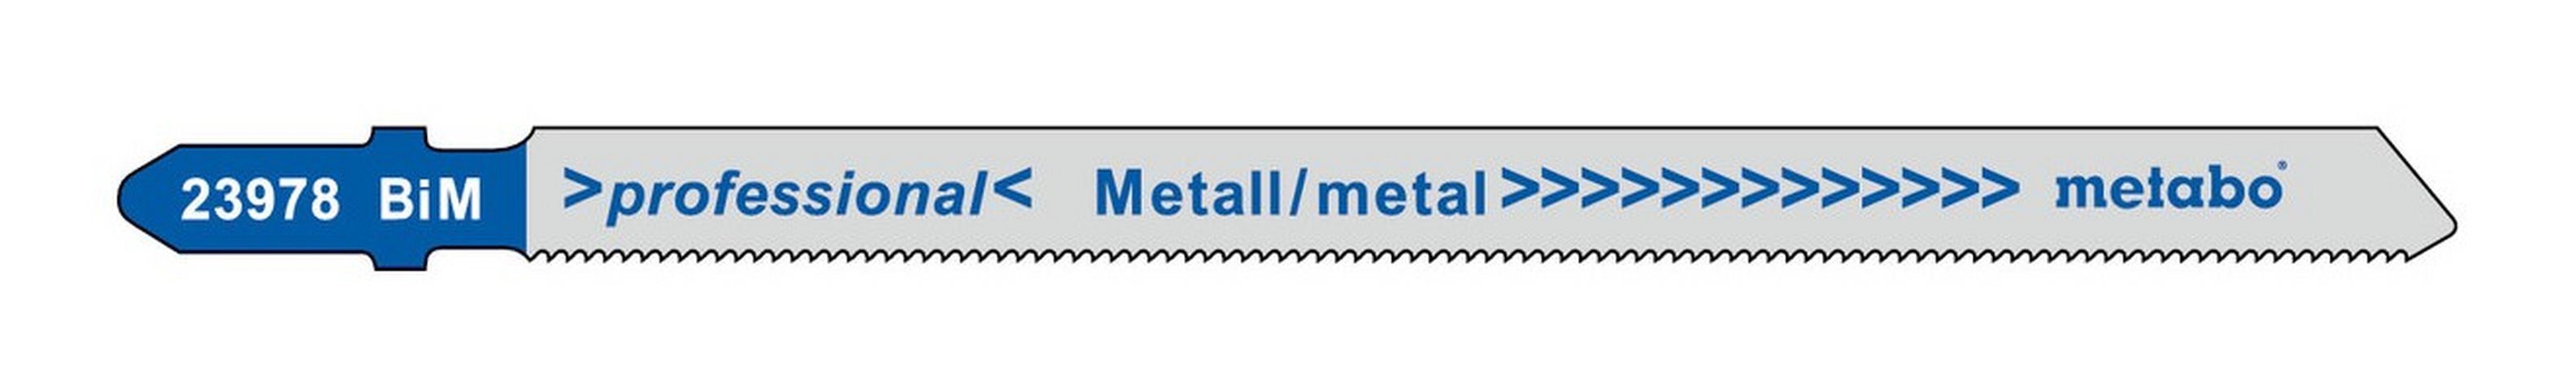 metabo Stichsägeblatt (5 Stück), Stichsägeblätter Metall Serie professional 106 / 1,1 mm BiM